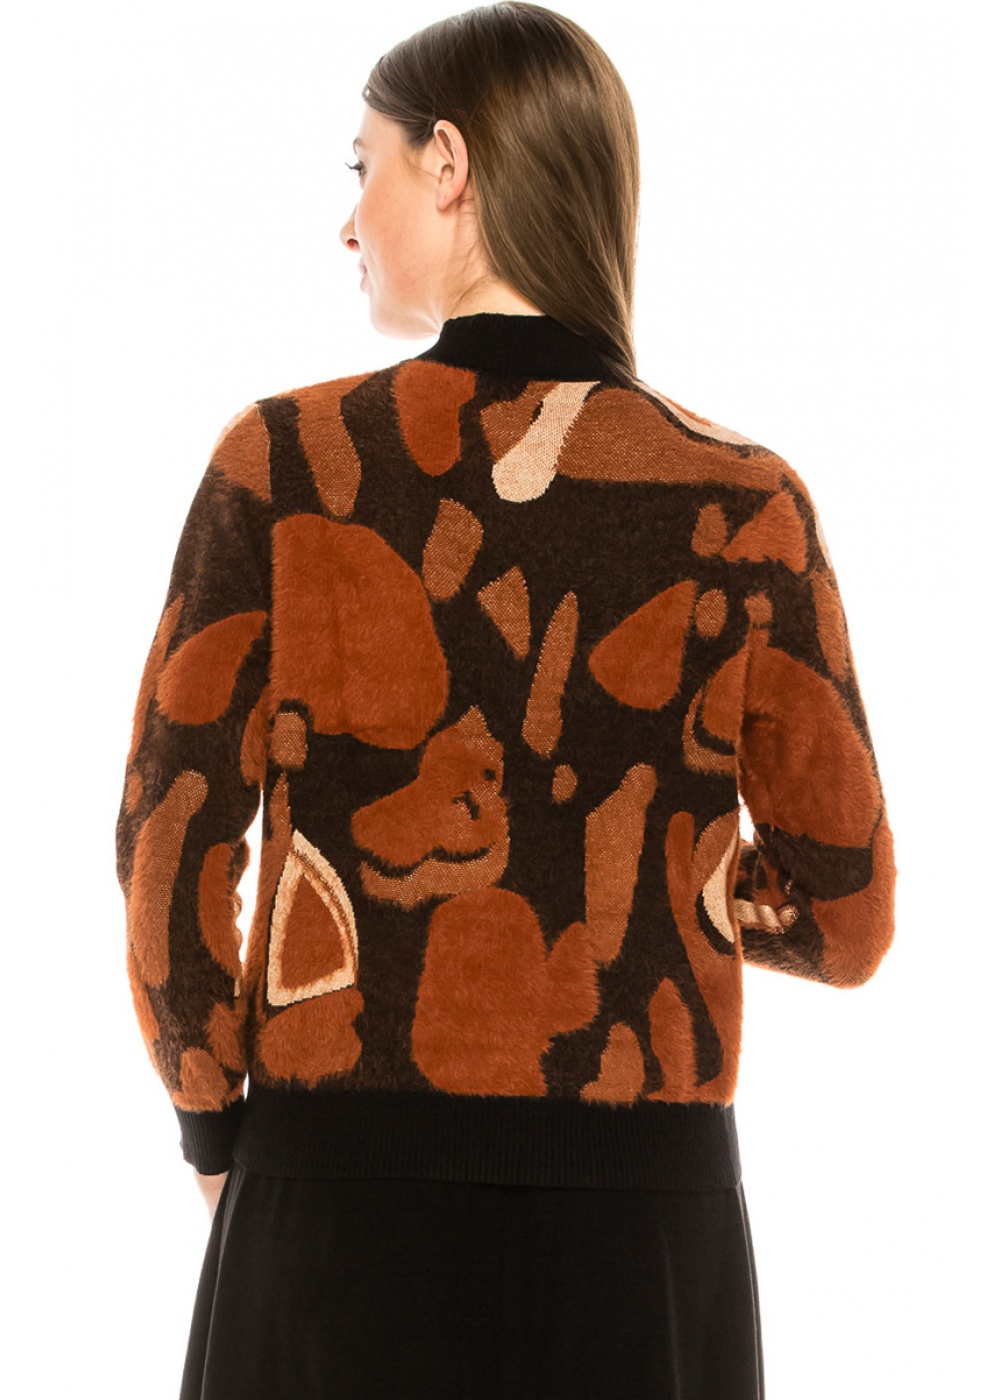 Asymmetrical print sweater in rust & black 